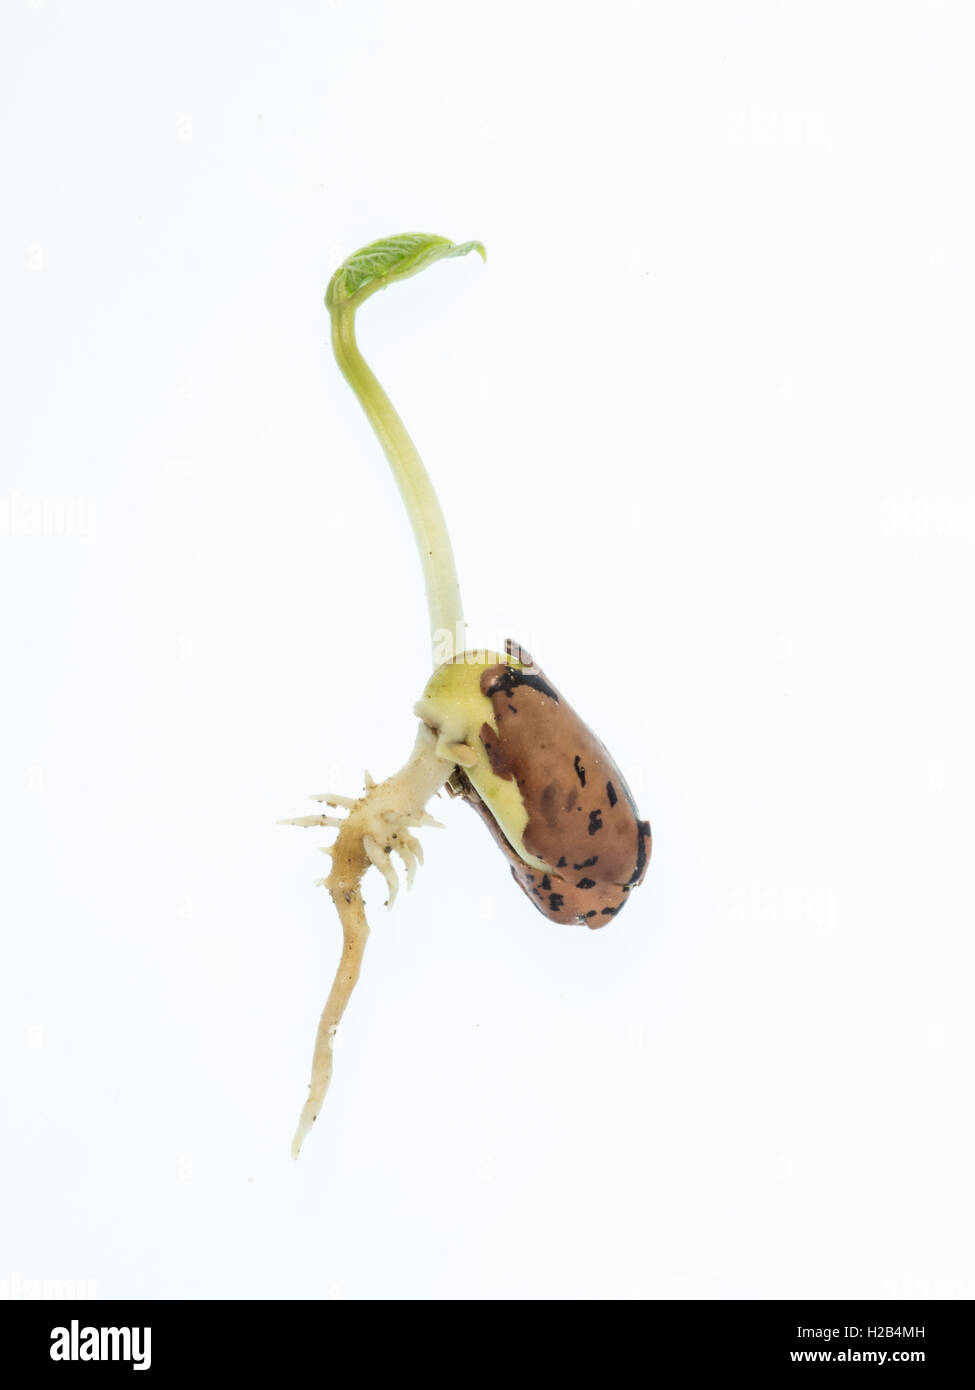 Newly germinated runner bean seedling Stock Photo